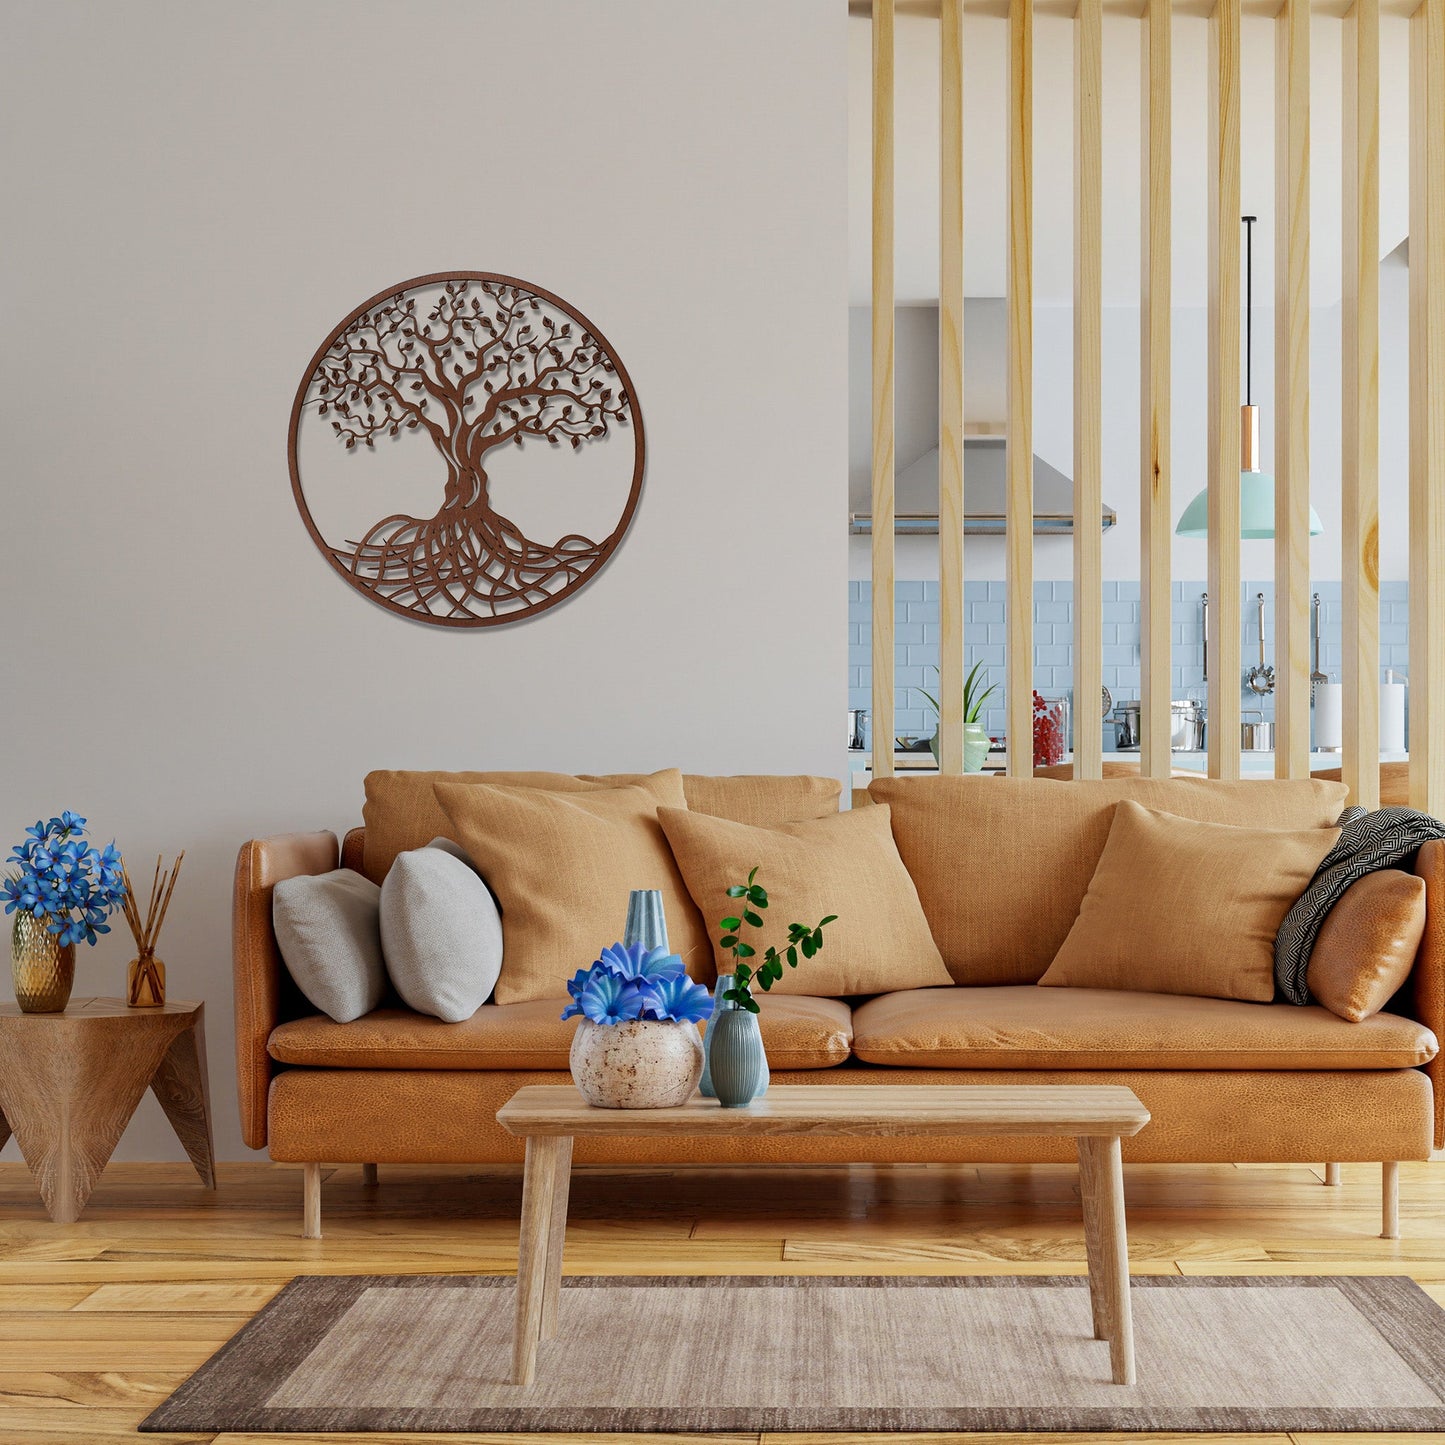 Wandbild Holz "Baum des Lebens" V1 - Nanino Design Onlineshop -